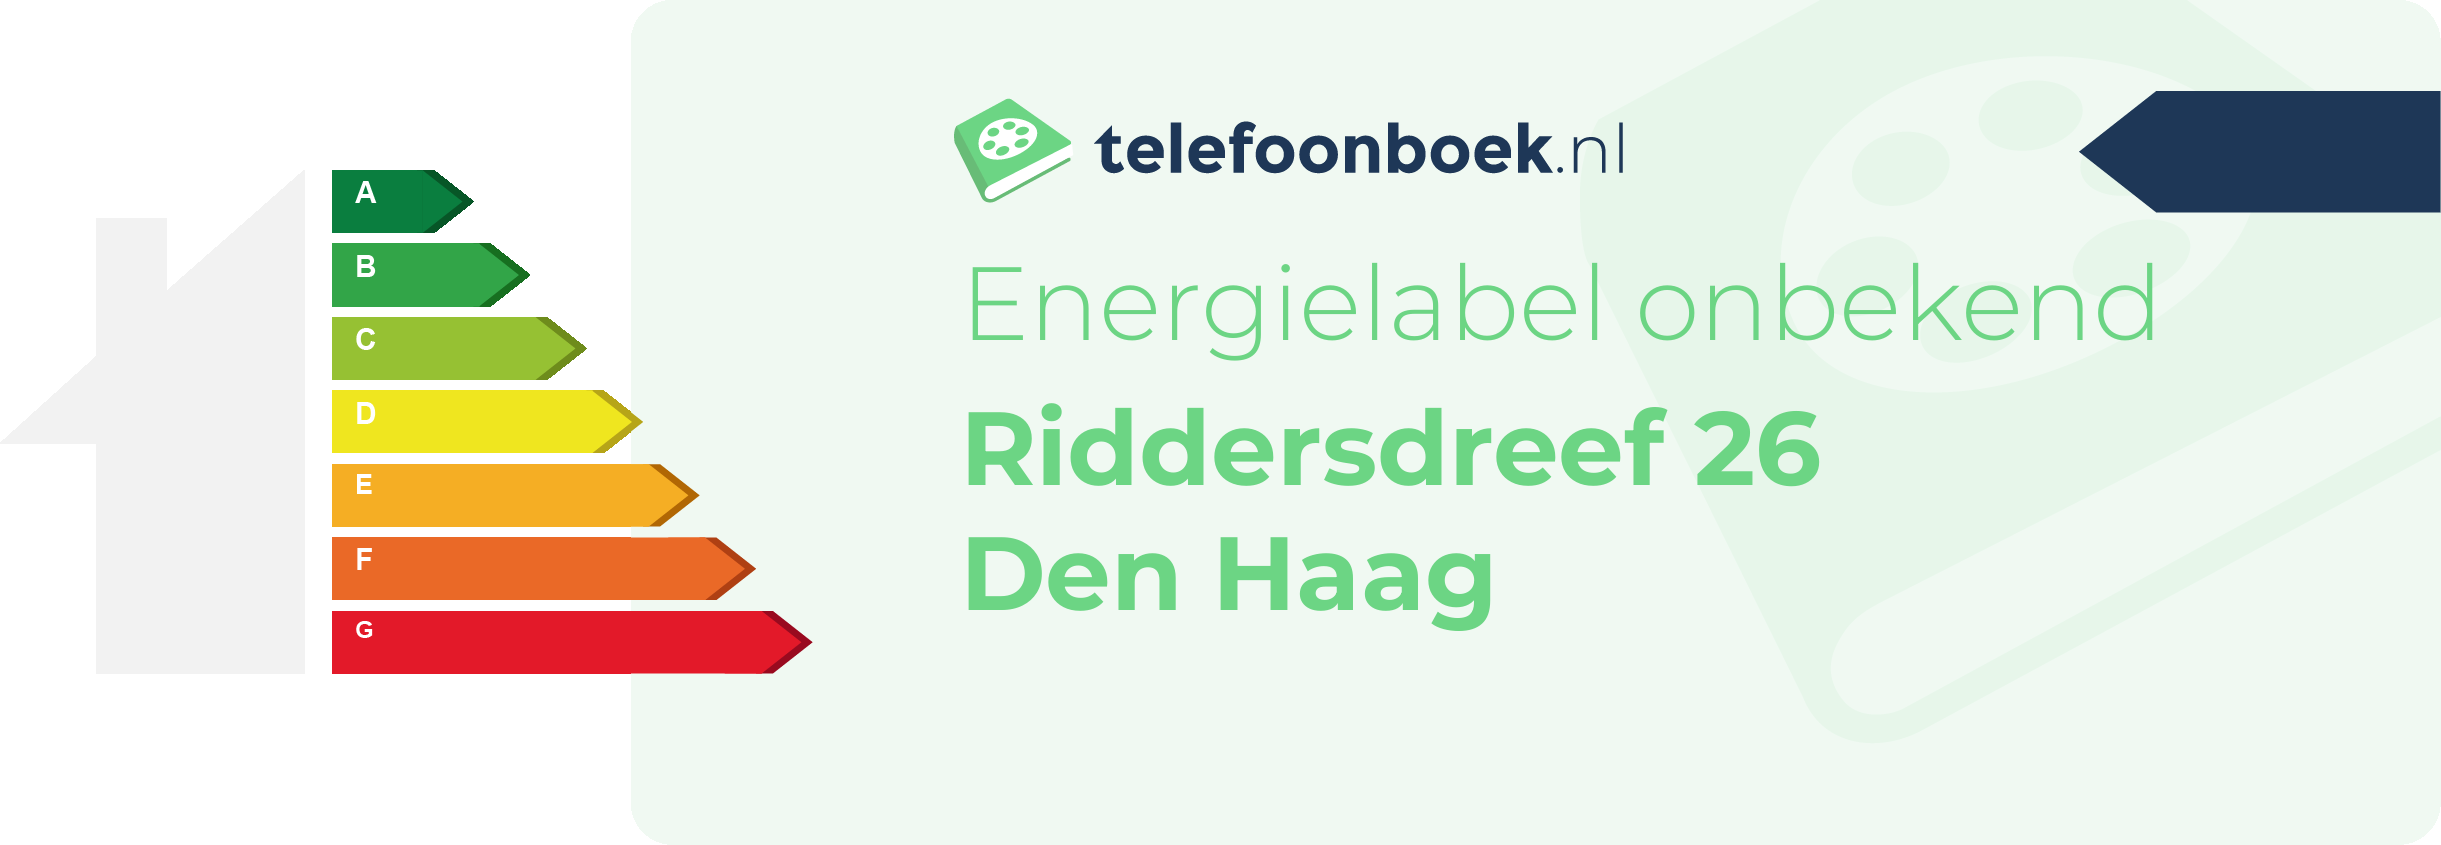 Energielabel Riddersdreef 26 Den Haag